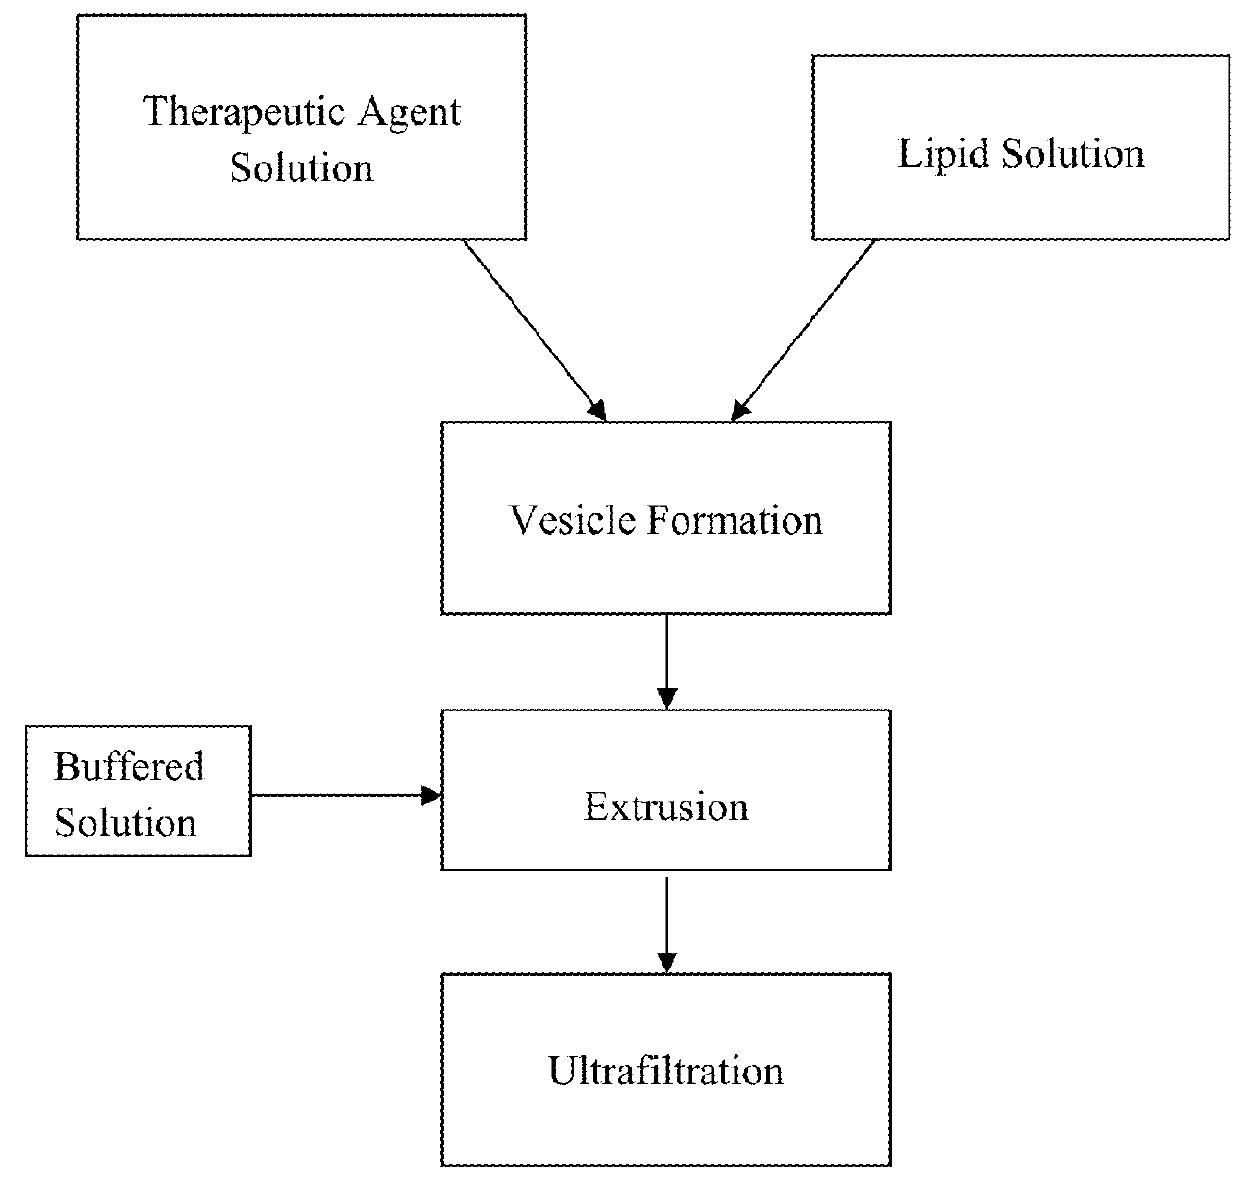 Liposome formulation and manufacture